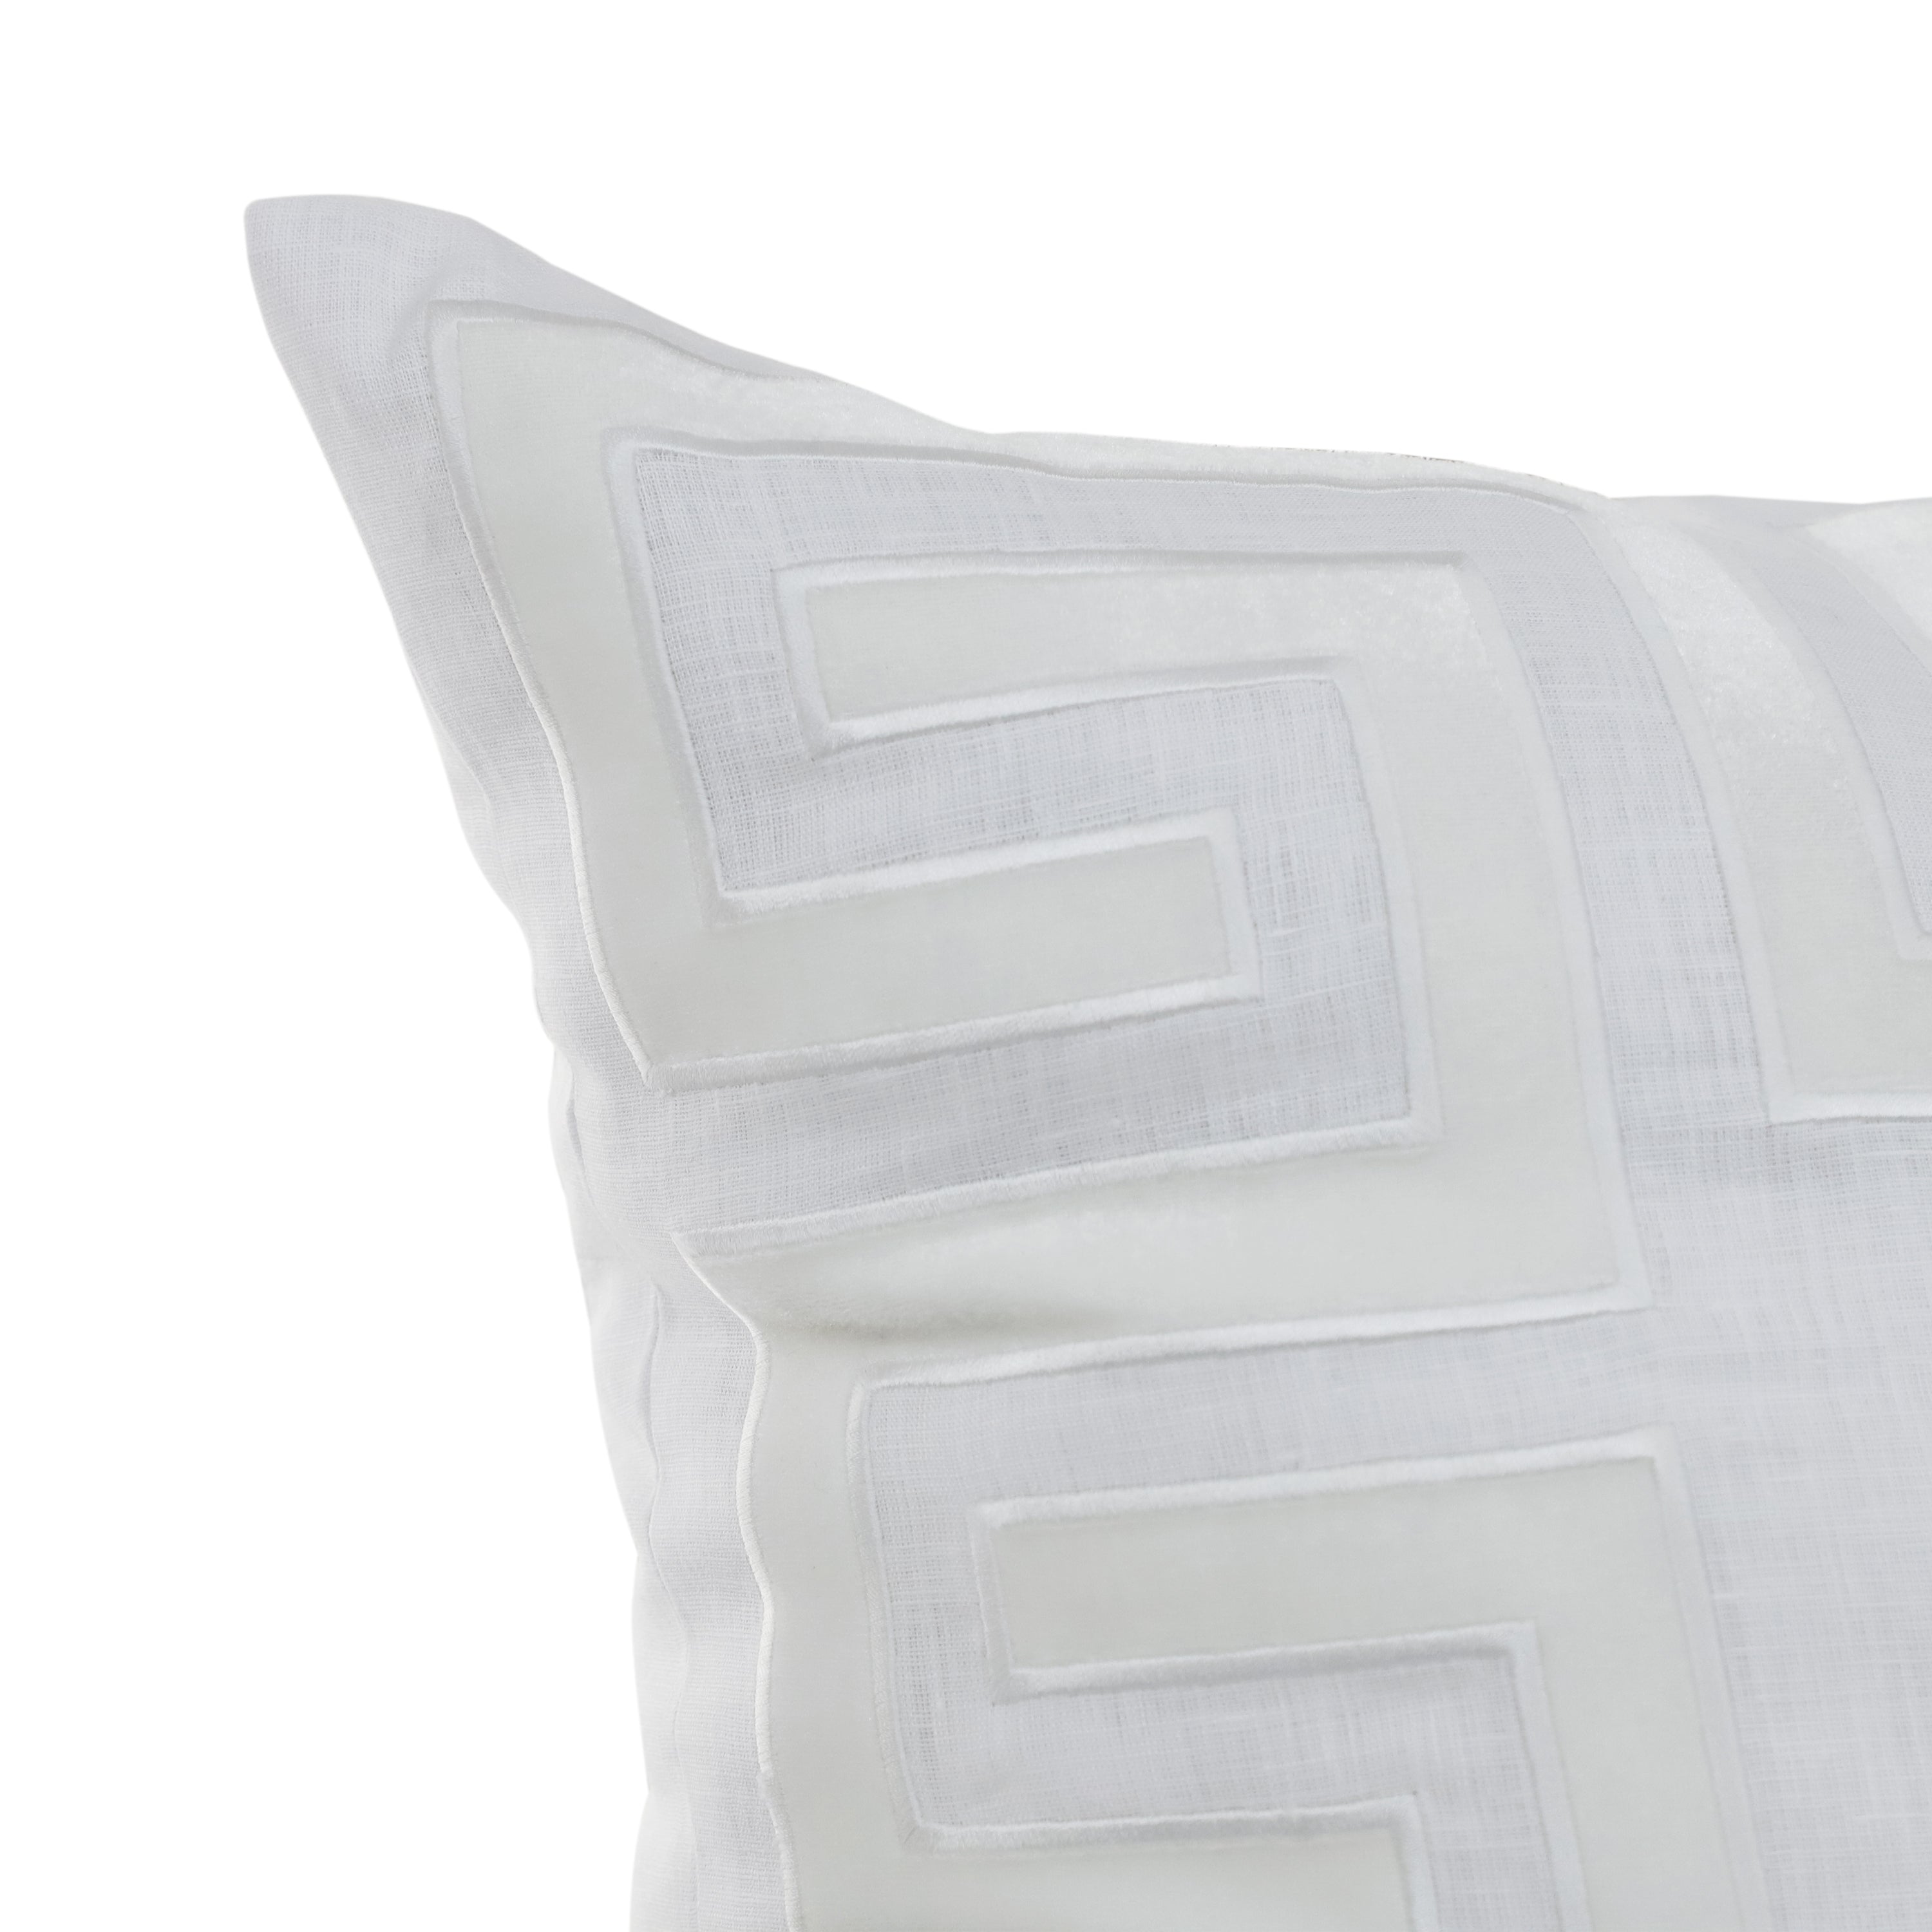 White Greek Key Linen Pillow Cover, Appliqué Pillow Case